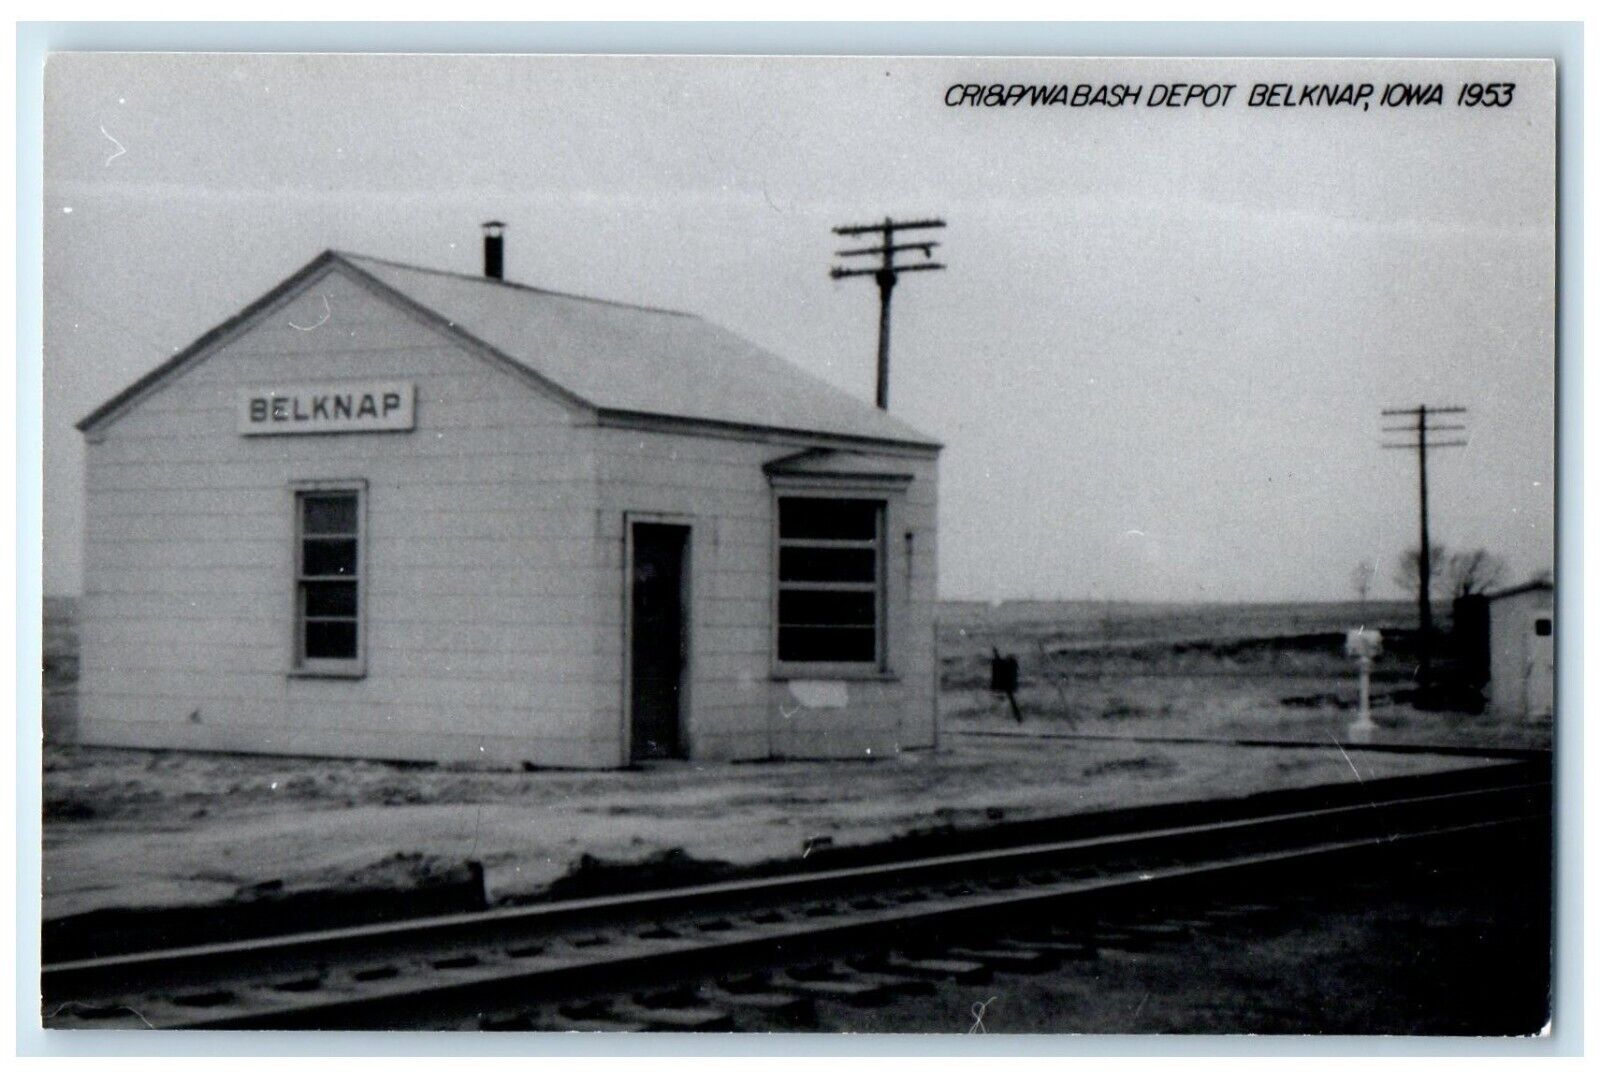 c1953 Cri&p Wabash Belknap Iowa Railroad Train Depot Station RPPC Photo Postcard